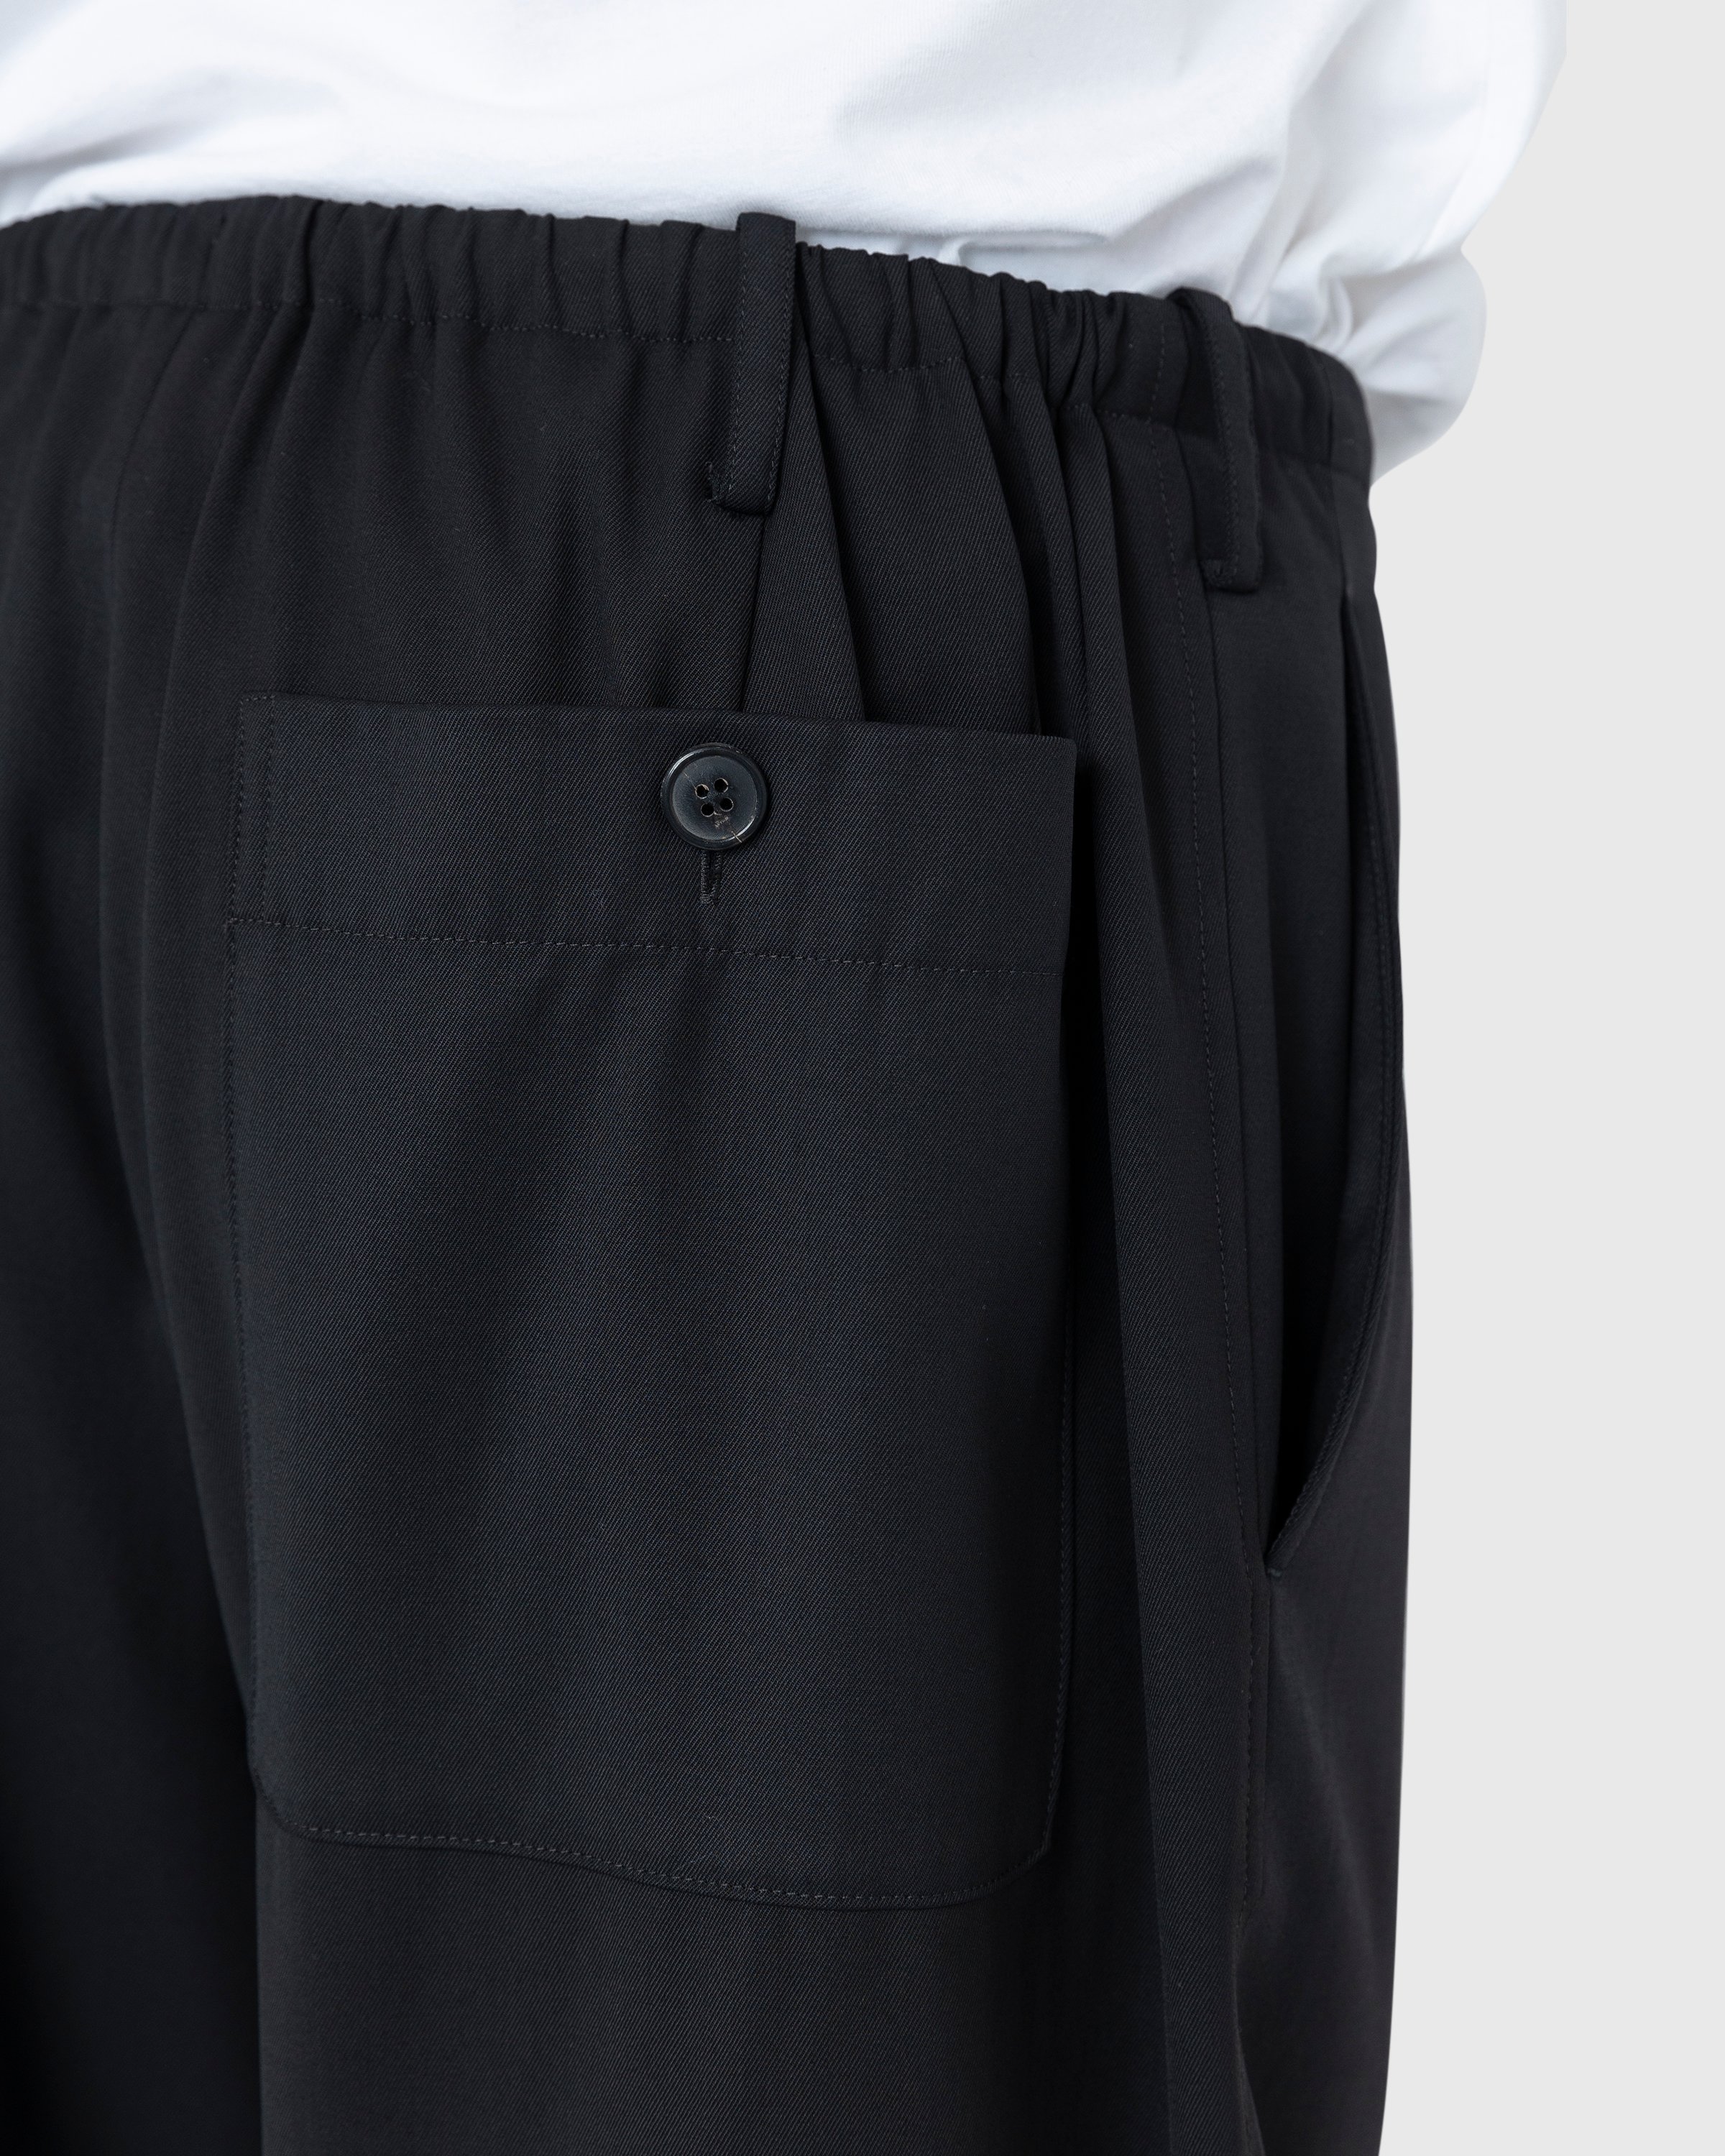 Dries van Noten - Penny Pants - Clothing - Black - Image 5